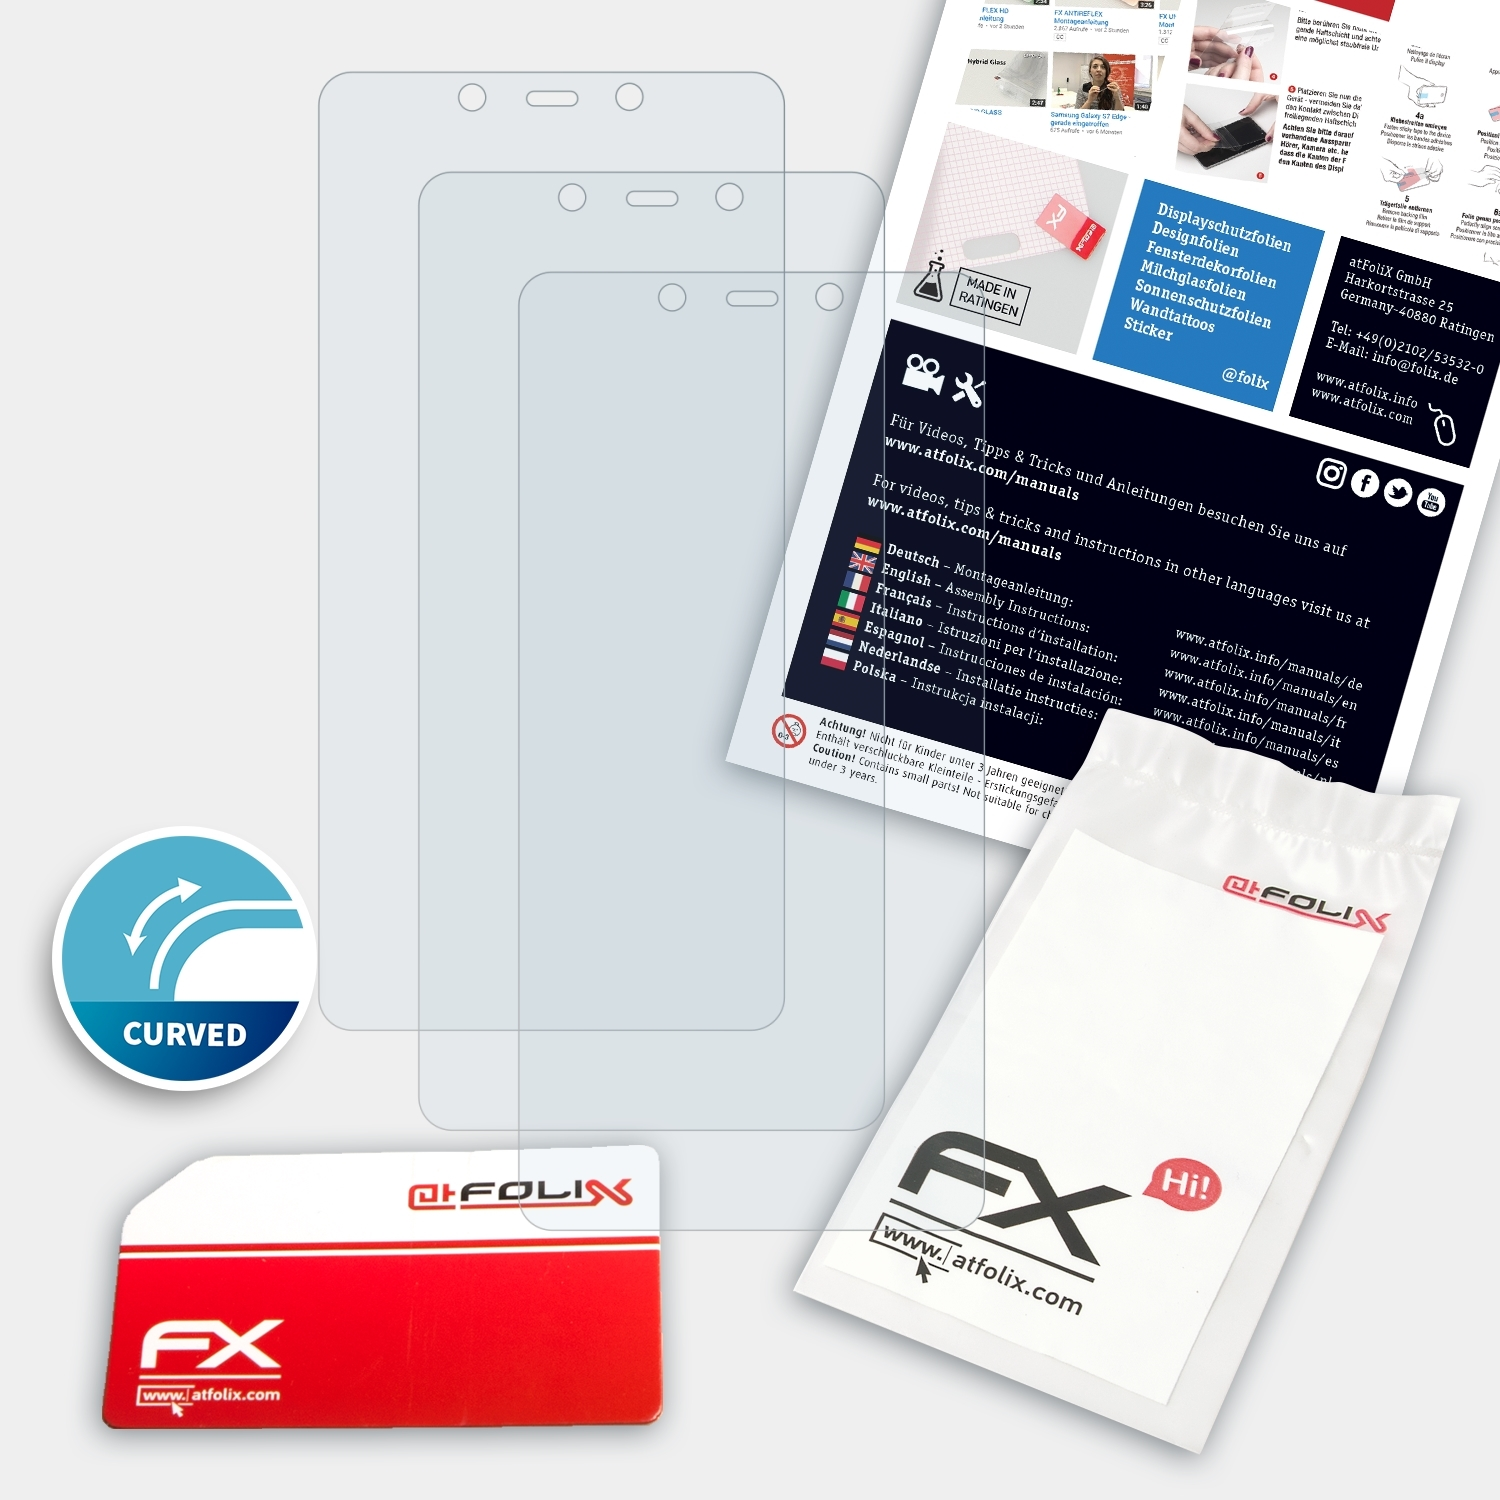 Displayschutz(für Xiaomi SE) ATFOLIX FX-ActiFleX 3x Mi 8